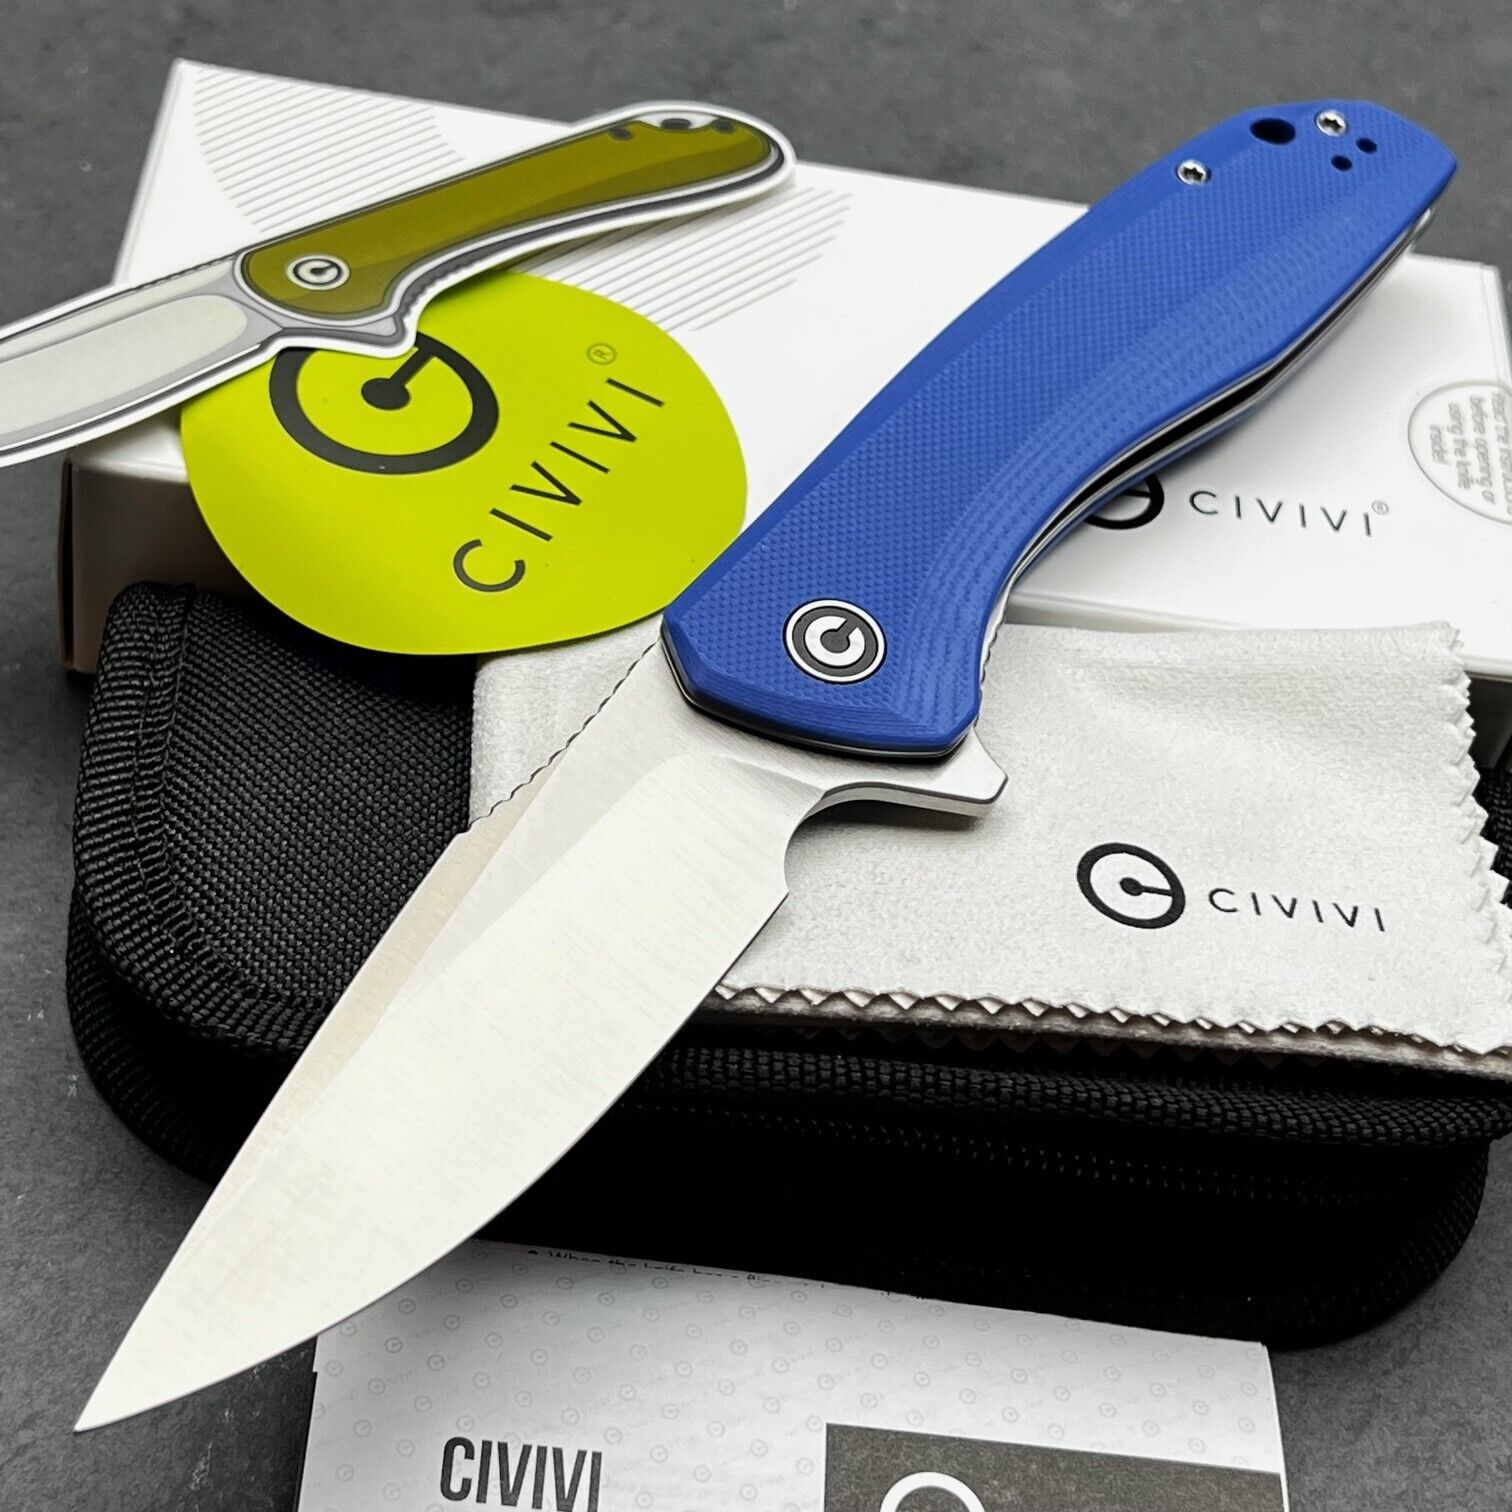 CIVIVI Baklash Blue G10 Handles Ball Bearing Flipper Blade Folding Pocket Knife